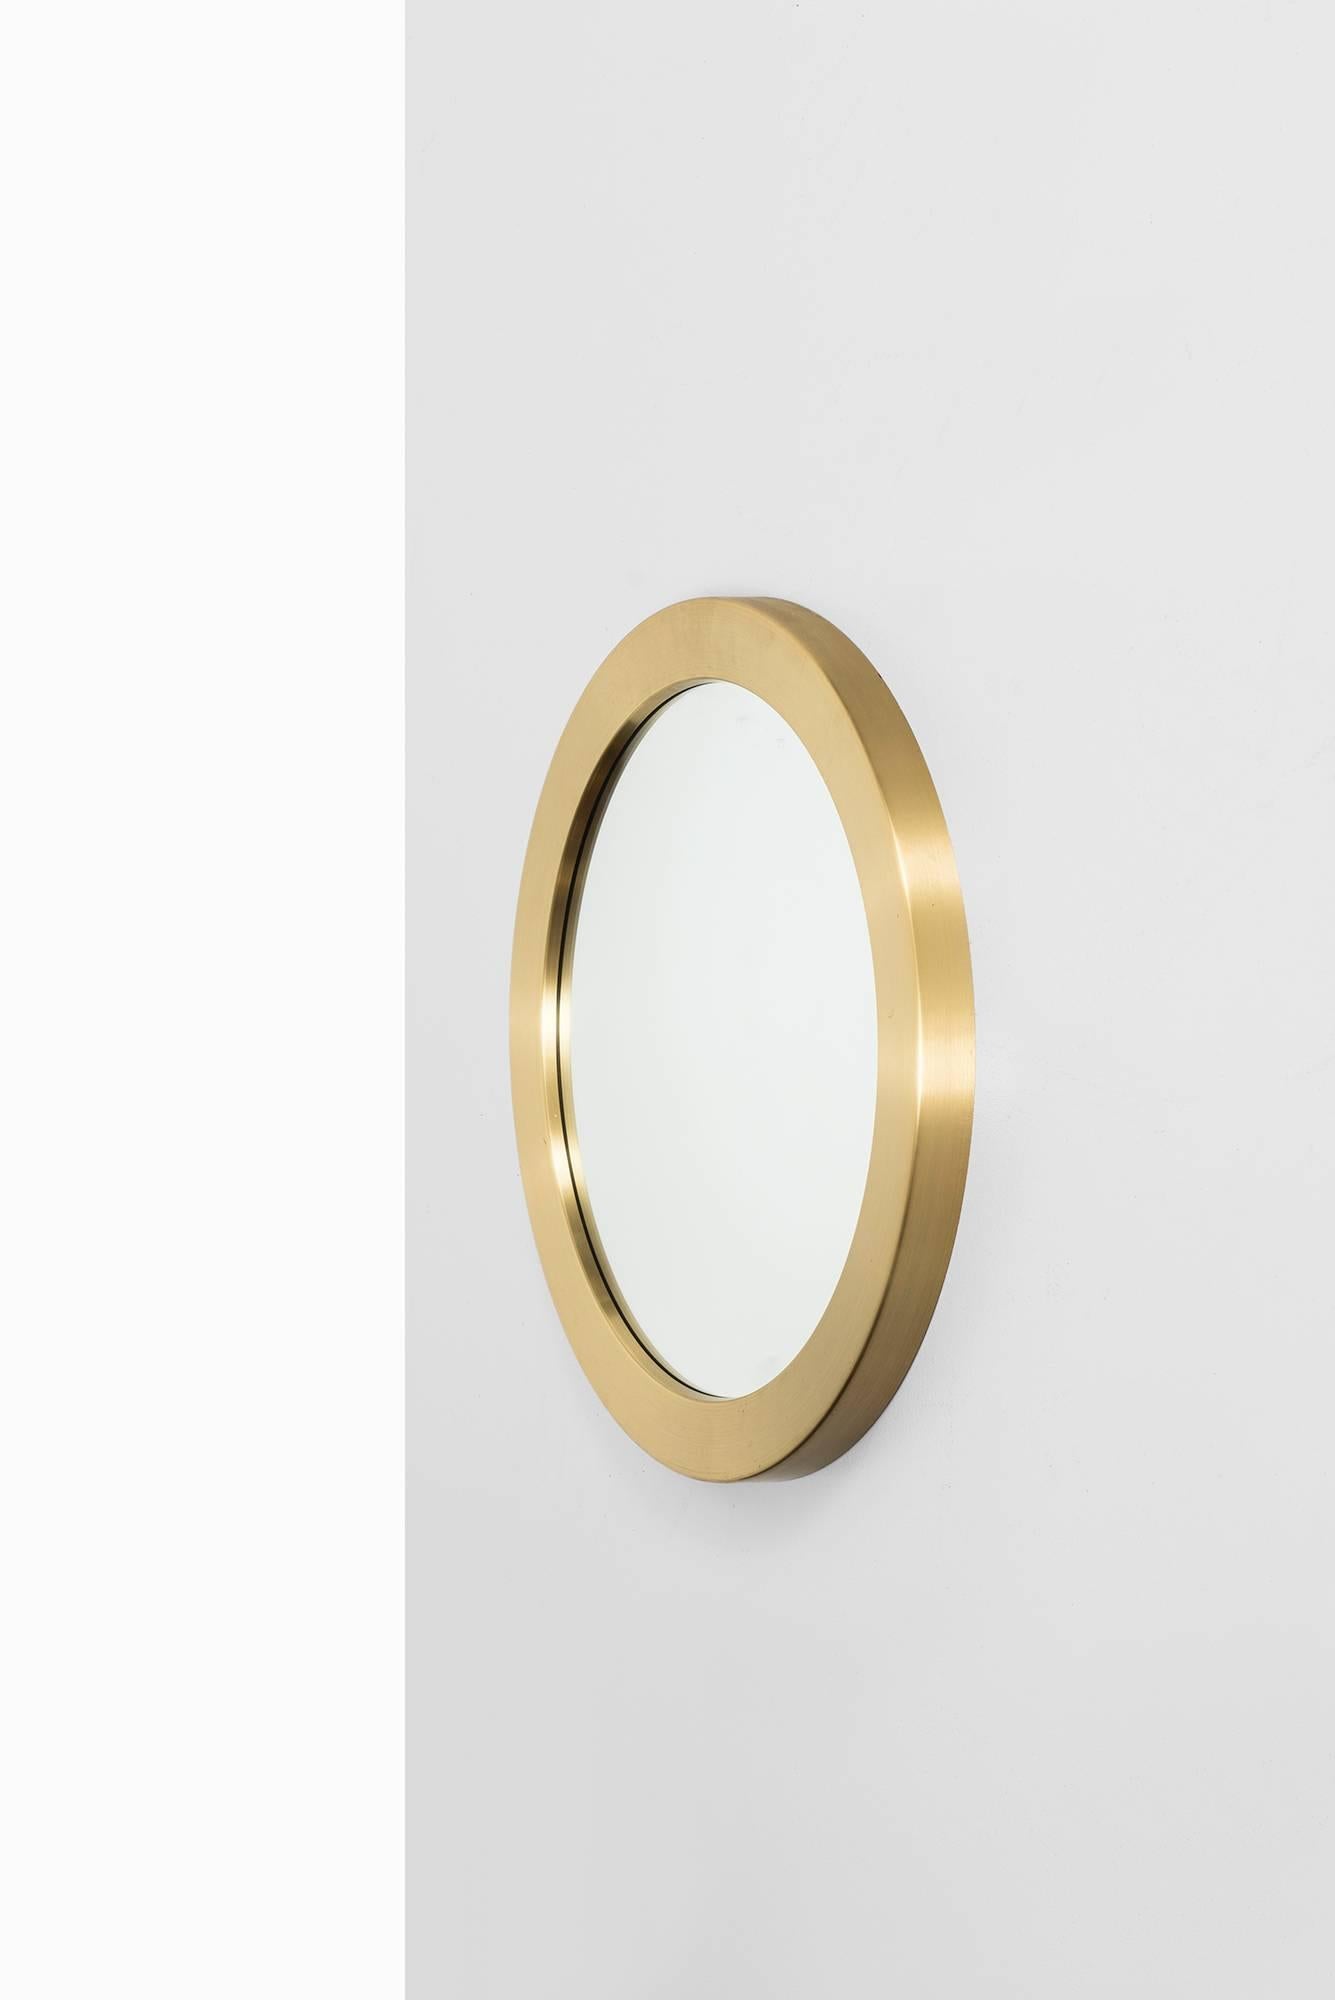 Scandinavian Modern Round Mirror in Brass Model Nr 134 by Glasmäster in Sweden For Sale